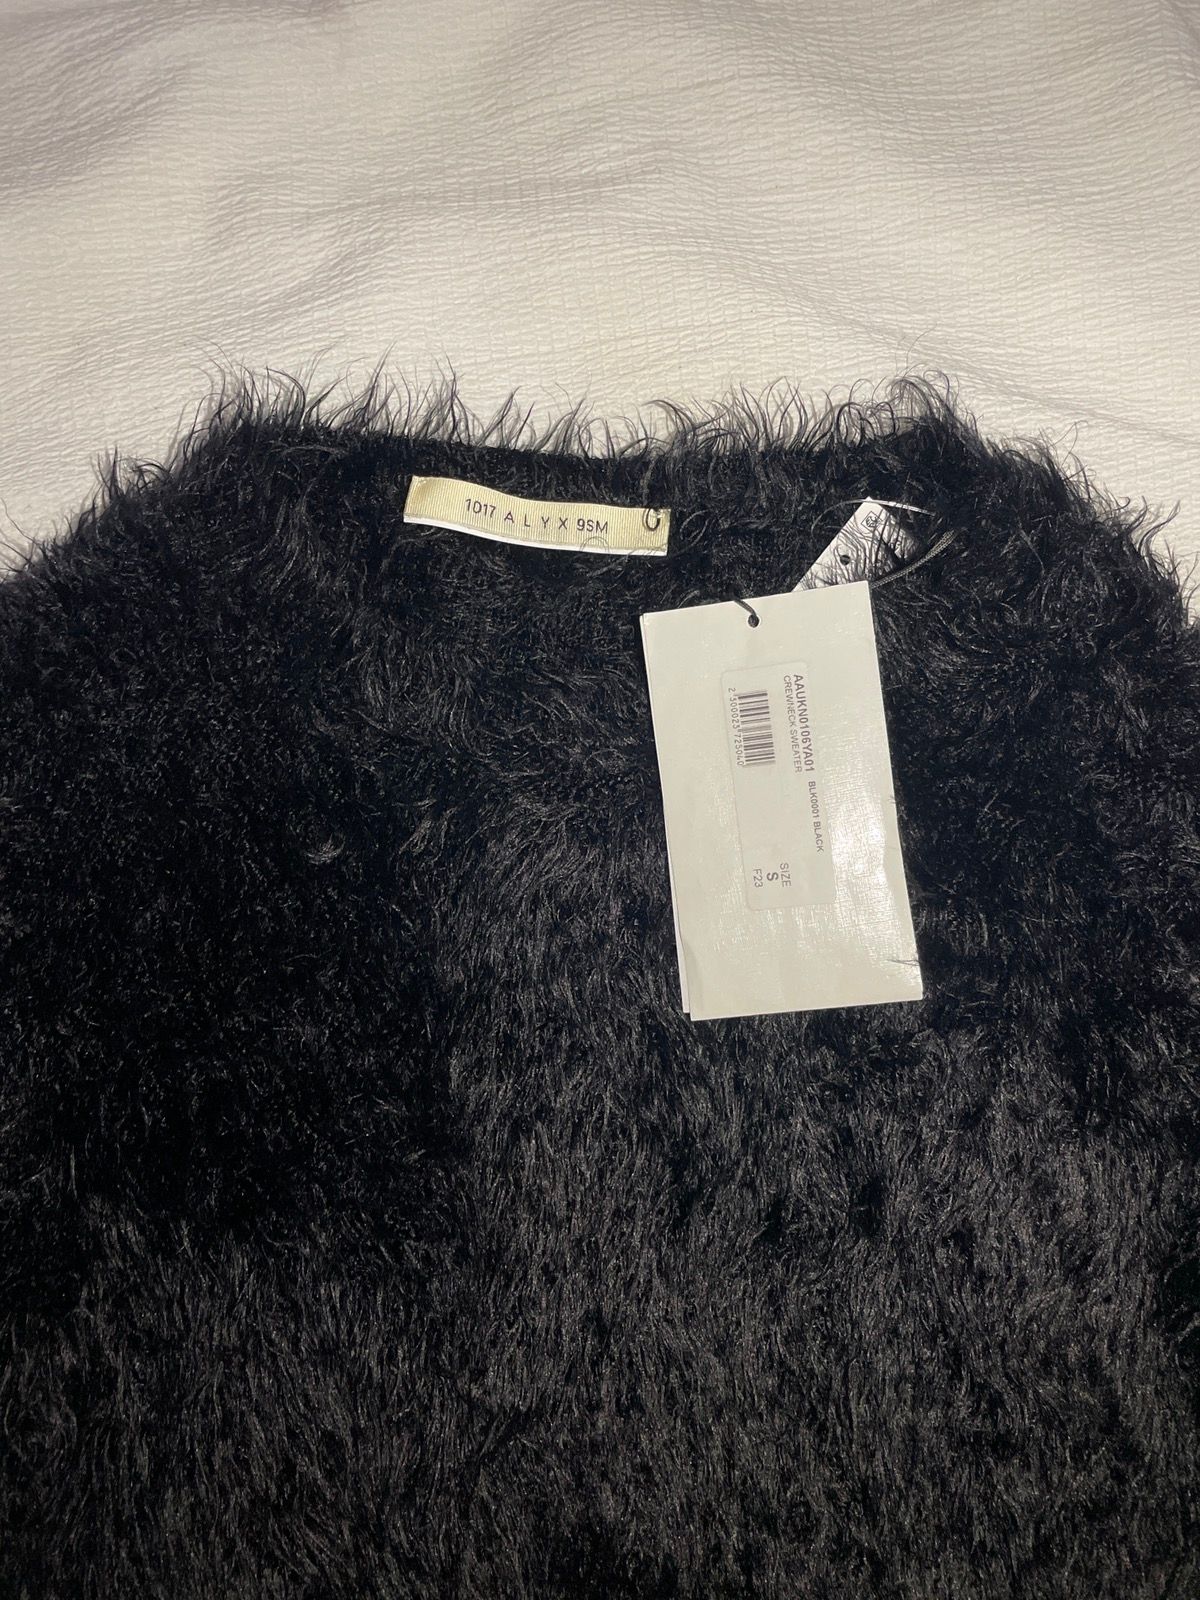 1017 ALYX 9SM 1017 ALYX 9SM Faux Fur Neck Sweater | Grailed